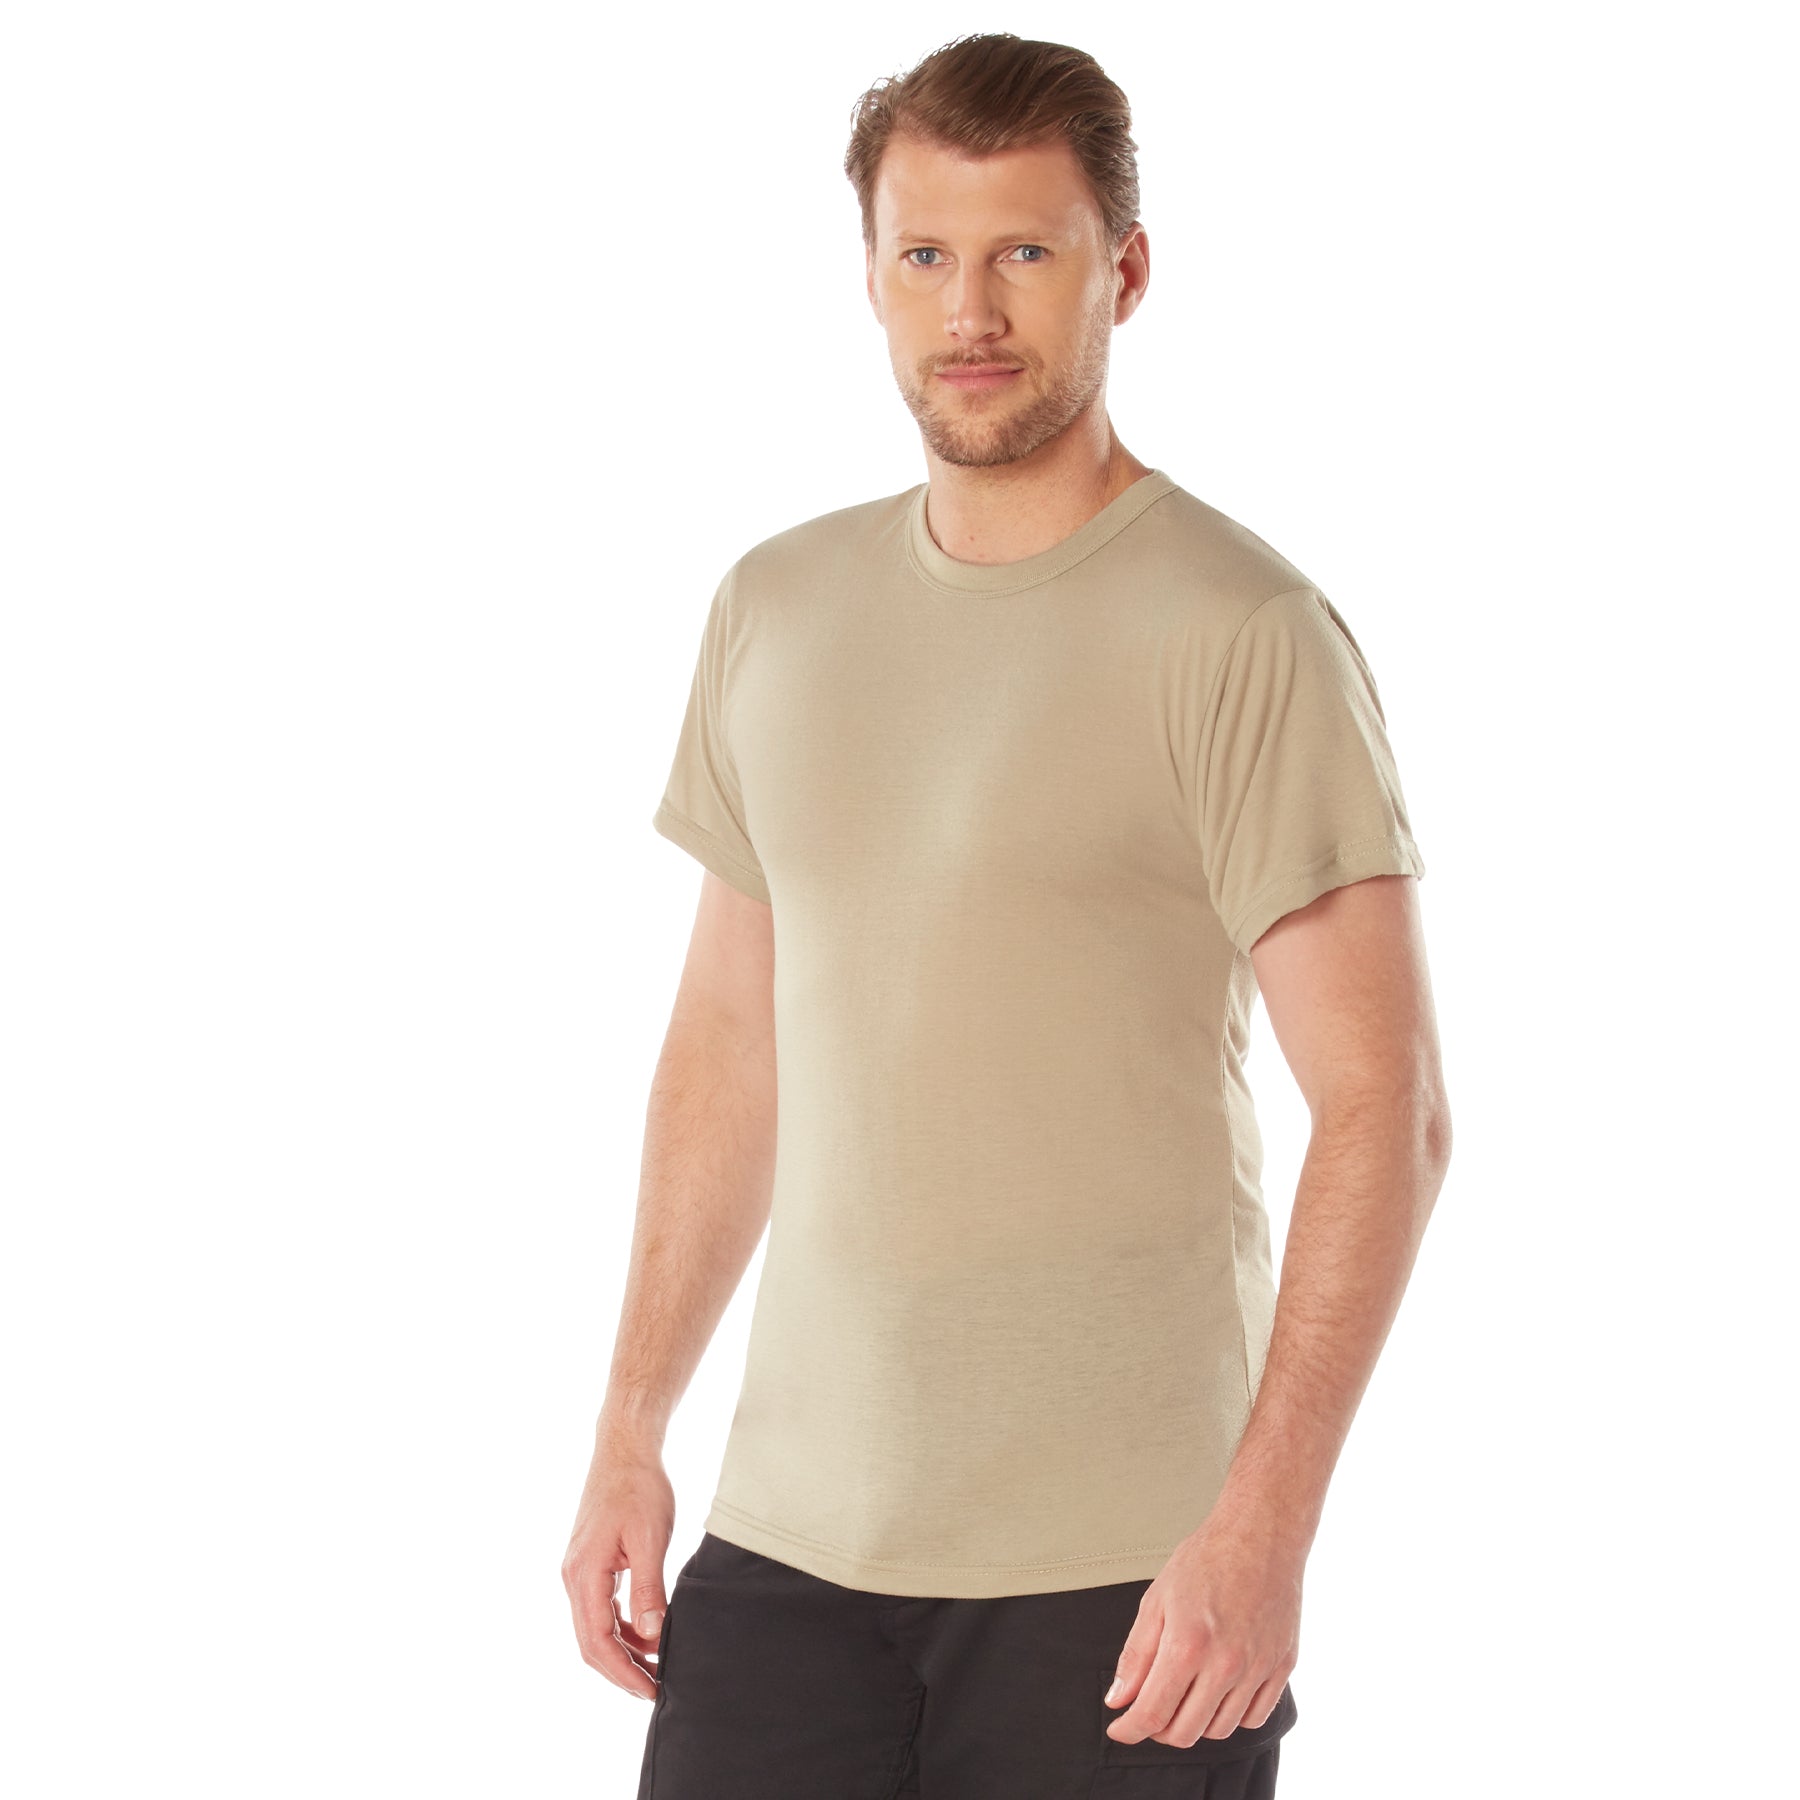 [AR 670-1][Military] Cotton T-Shirts Desert Sand